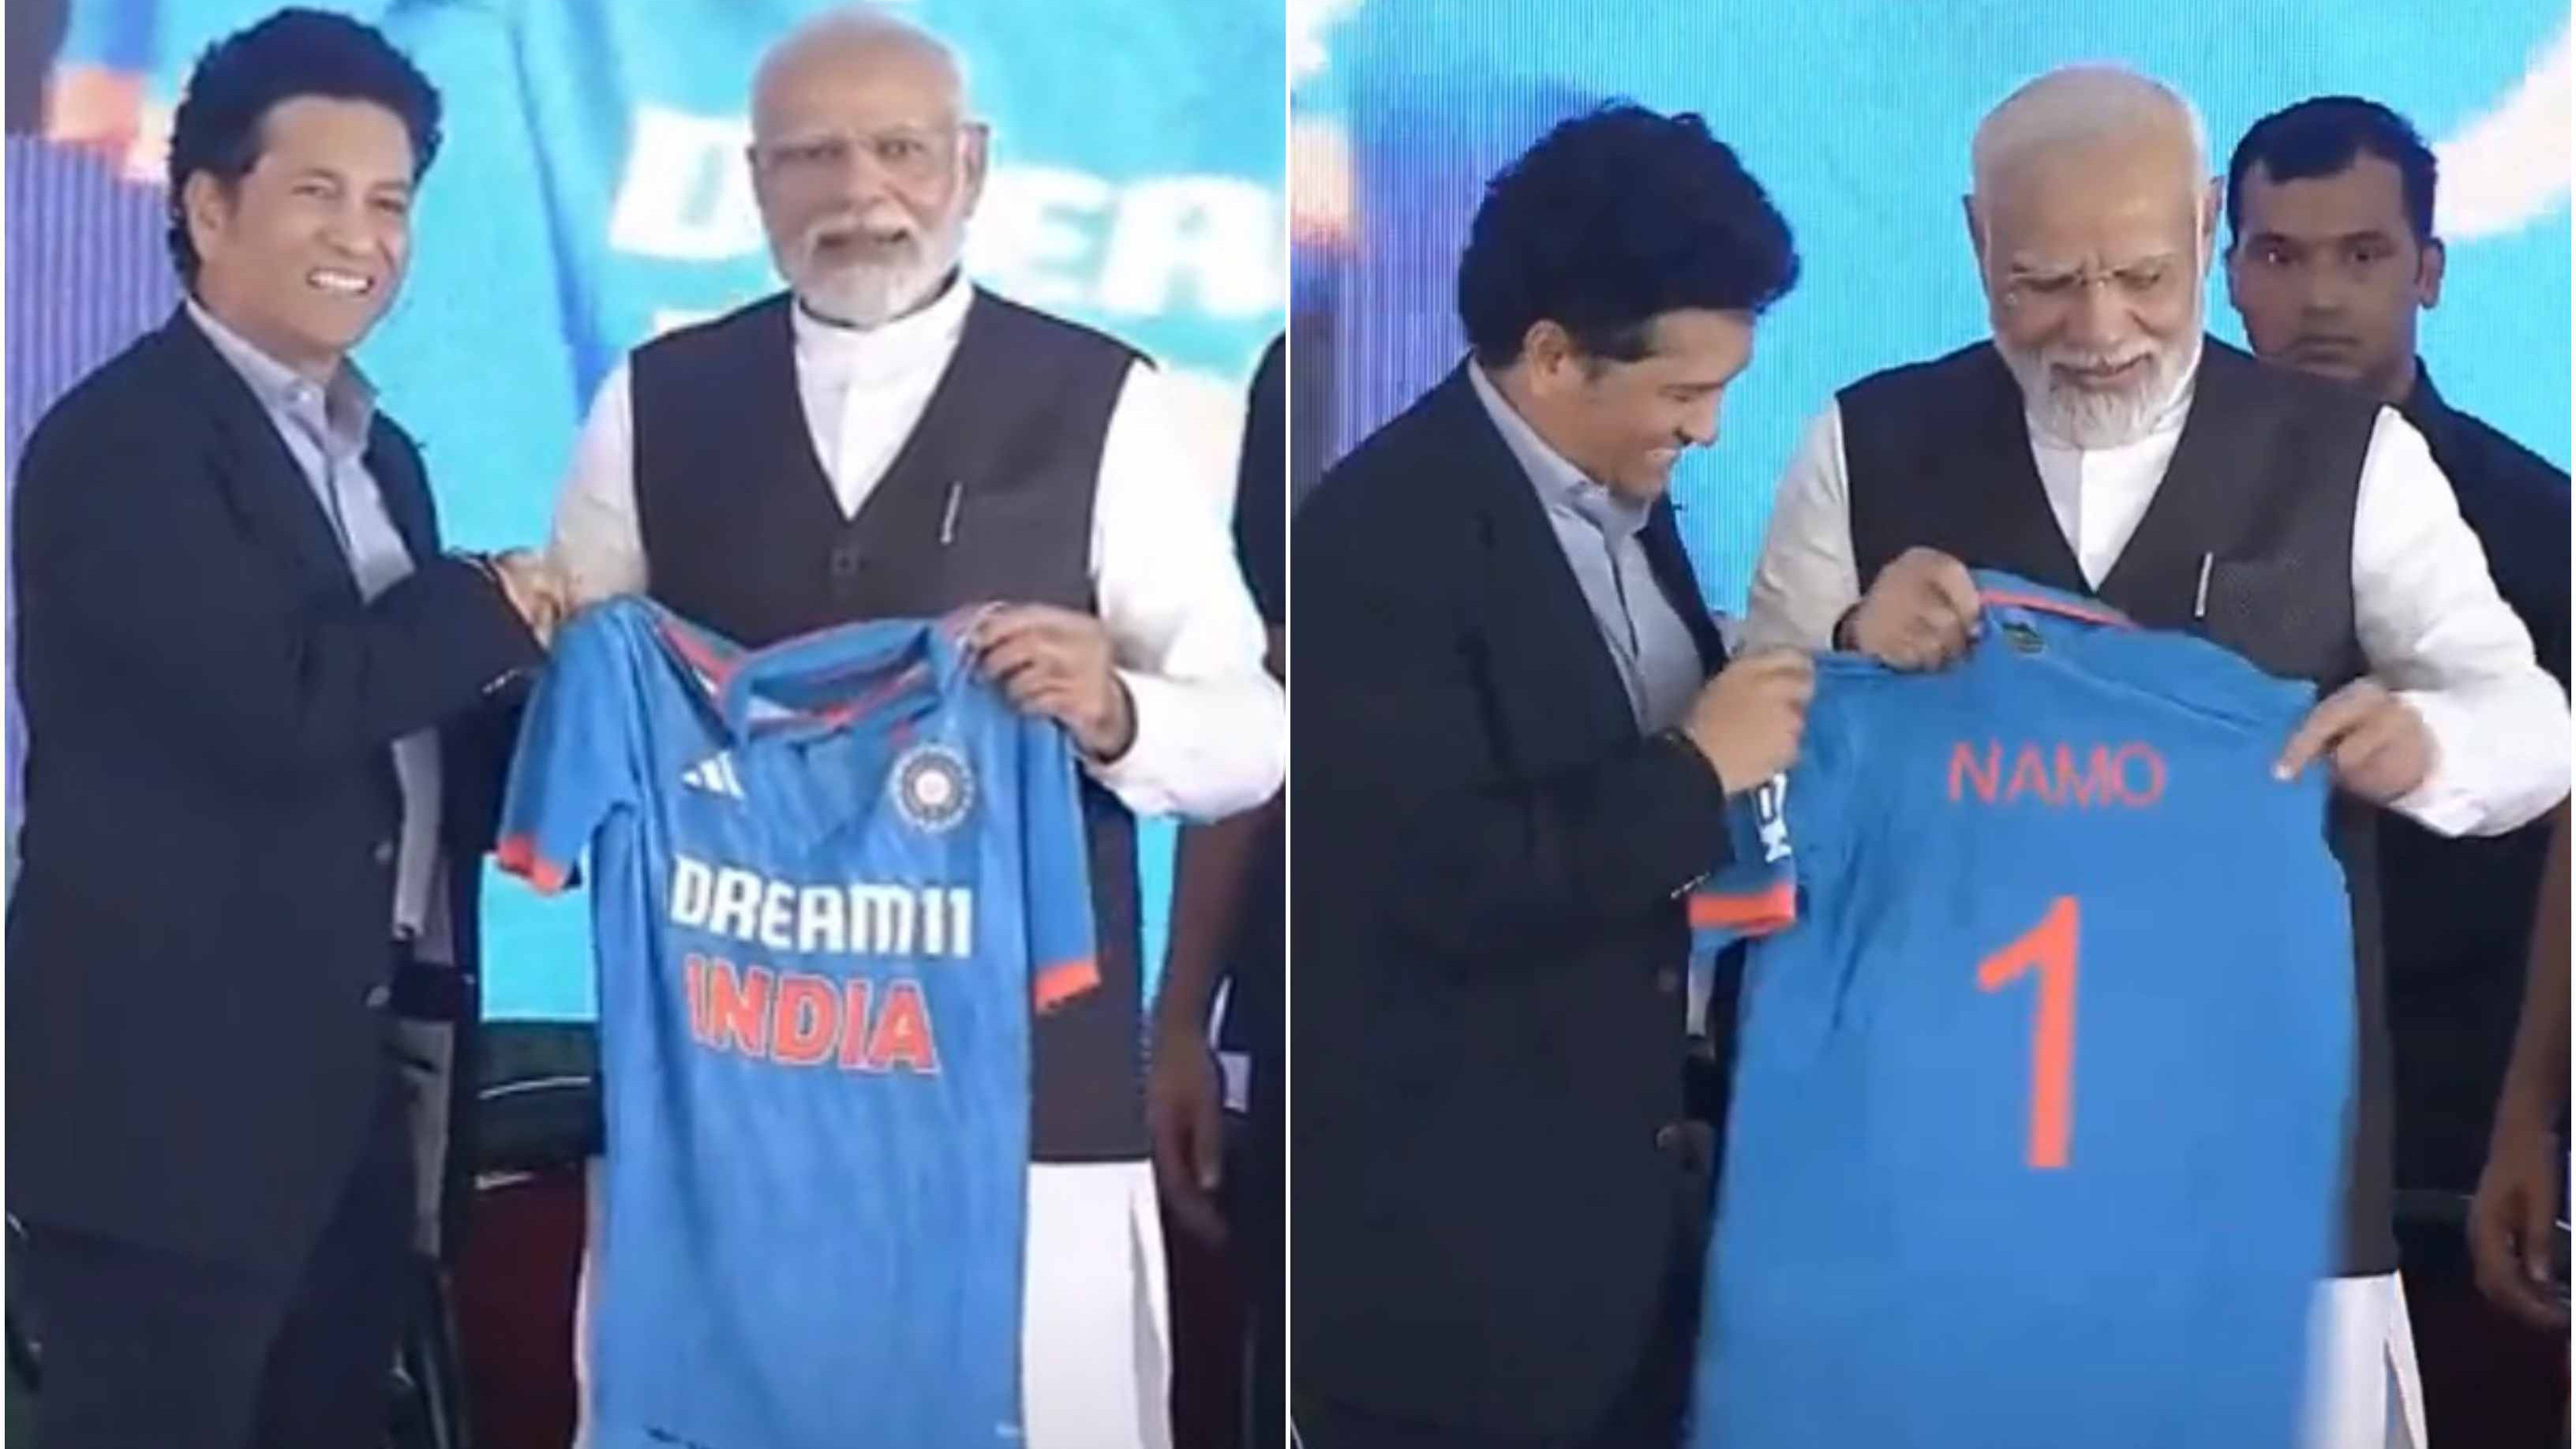 WATCH: Sachin Tendulkar presents Team India jersey to Narendra Modi as PM lays foundation for new stadium in Varanasi